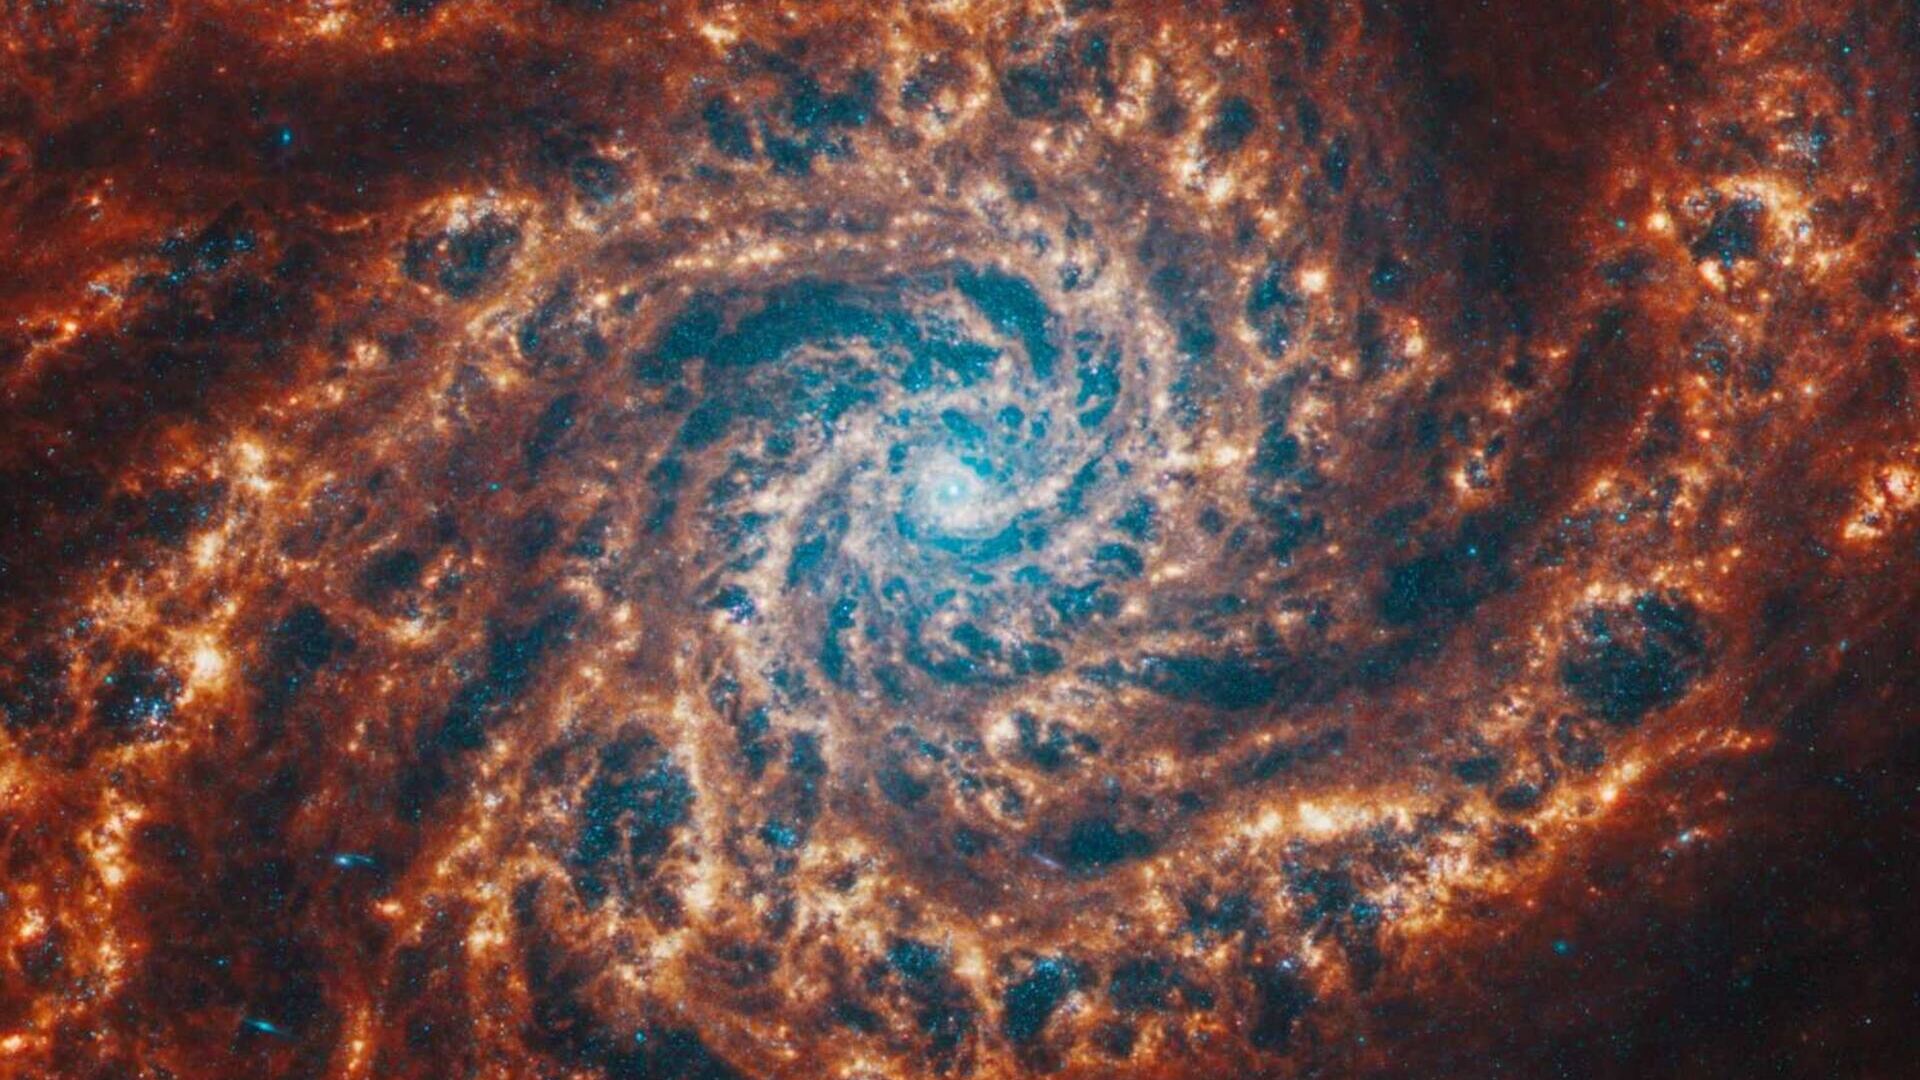 Master in Sistemi Spaziali: una galassia a spirale ripresa dal James Webb Telescope